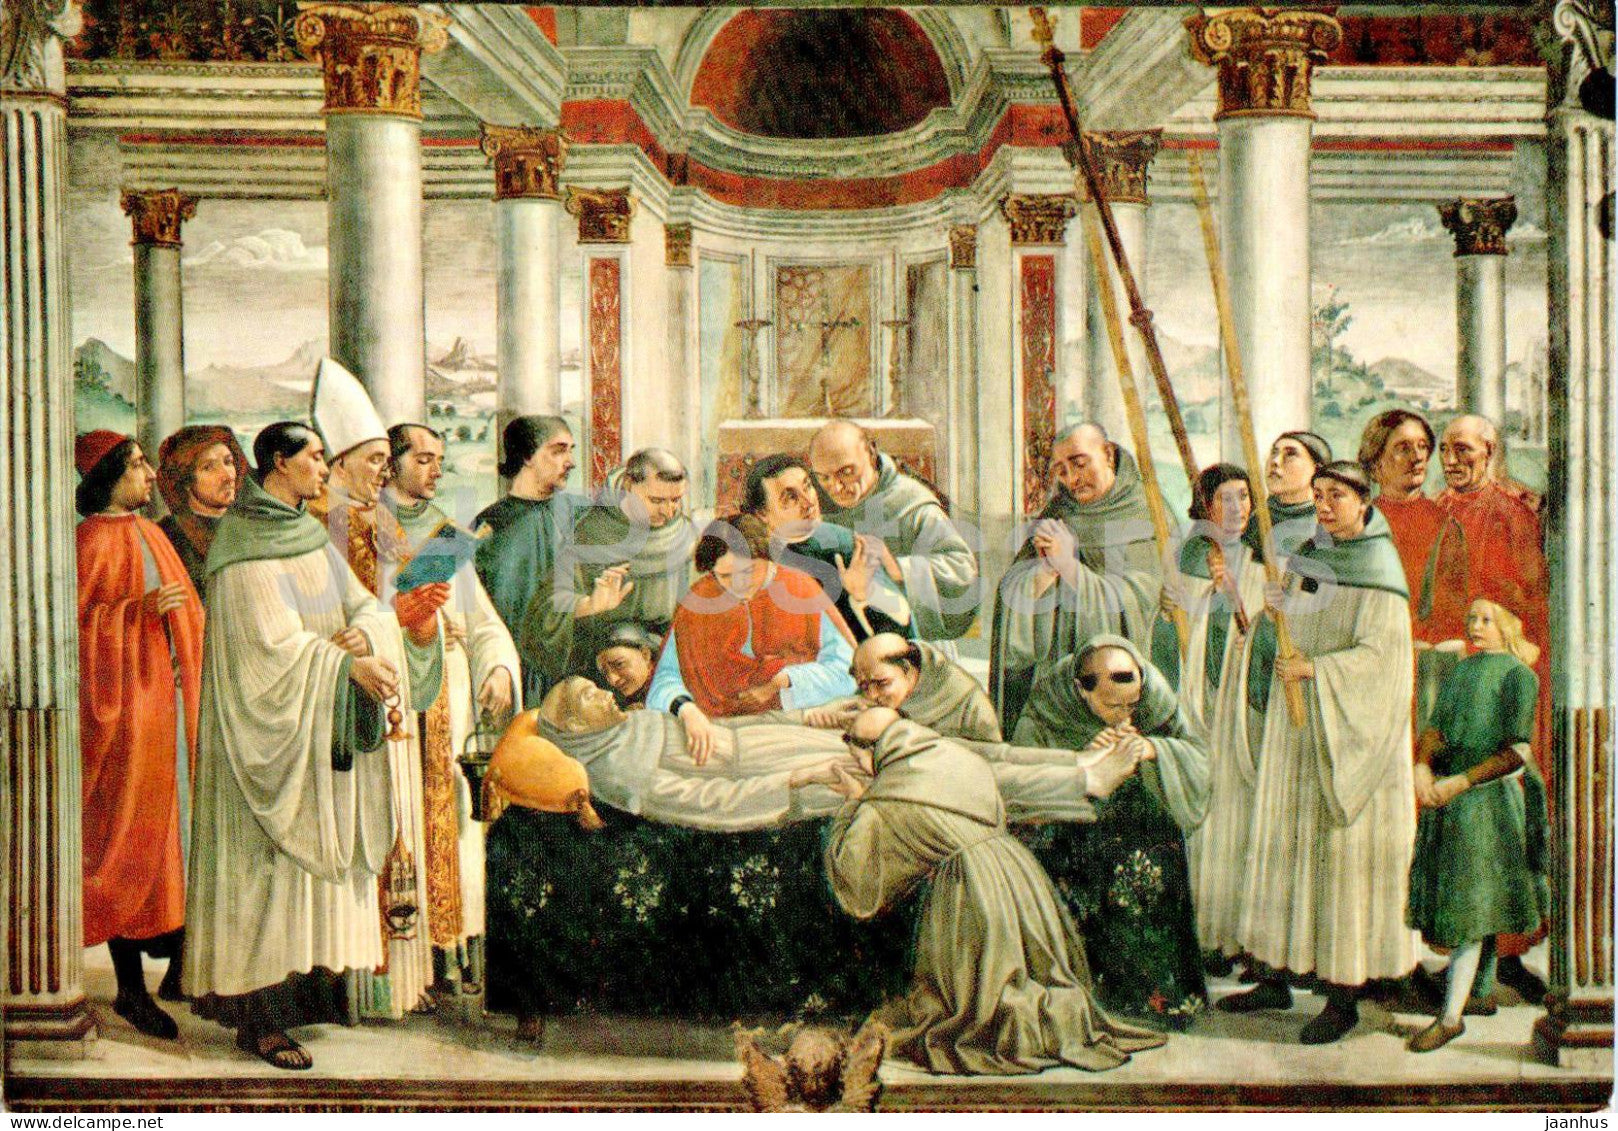 Firenze - Florence - Basilica di S Trinita - D Ghirlandaio - La Morte di S Francesco - painting - 599 - Italy - used - JH Postcards